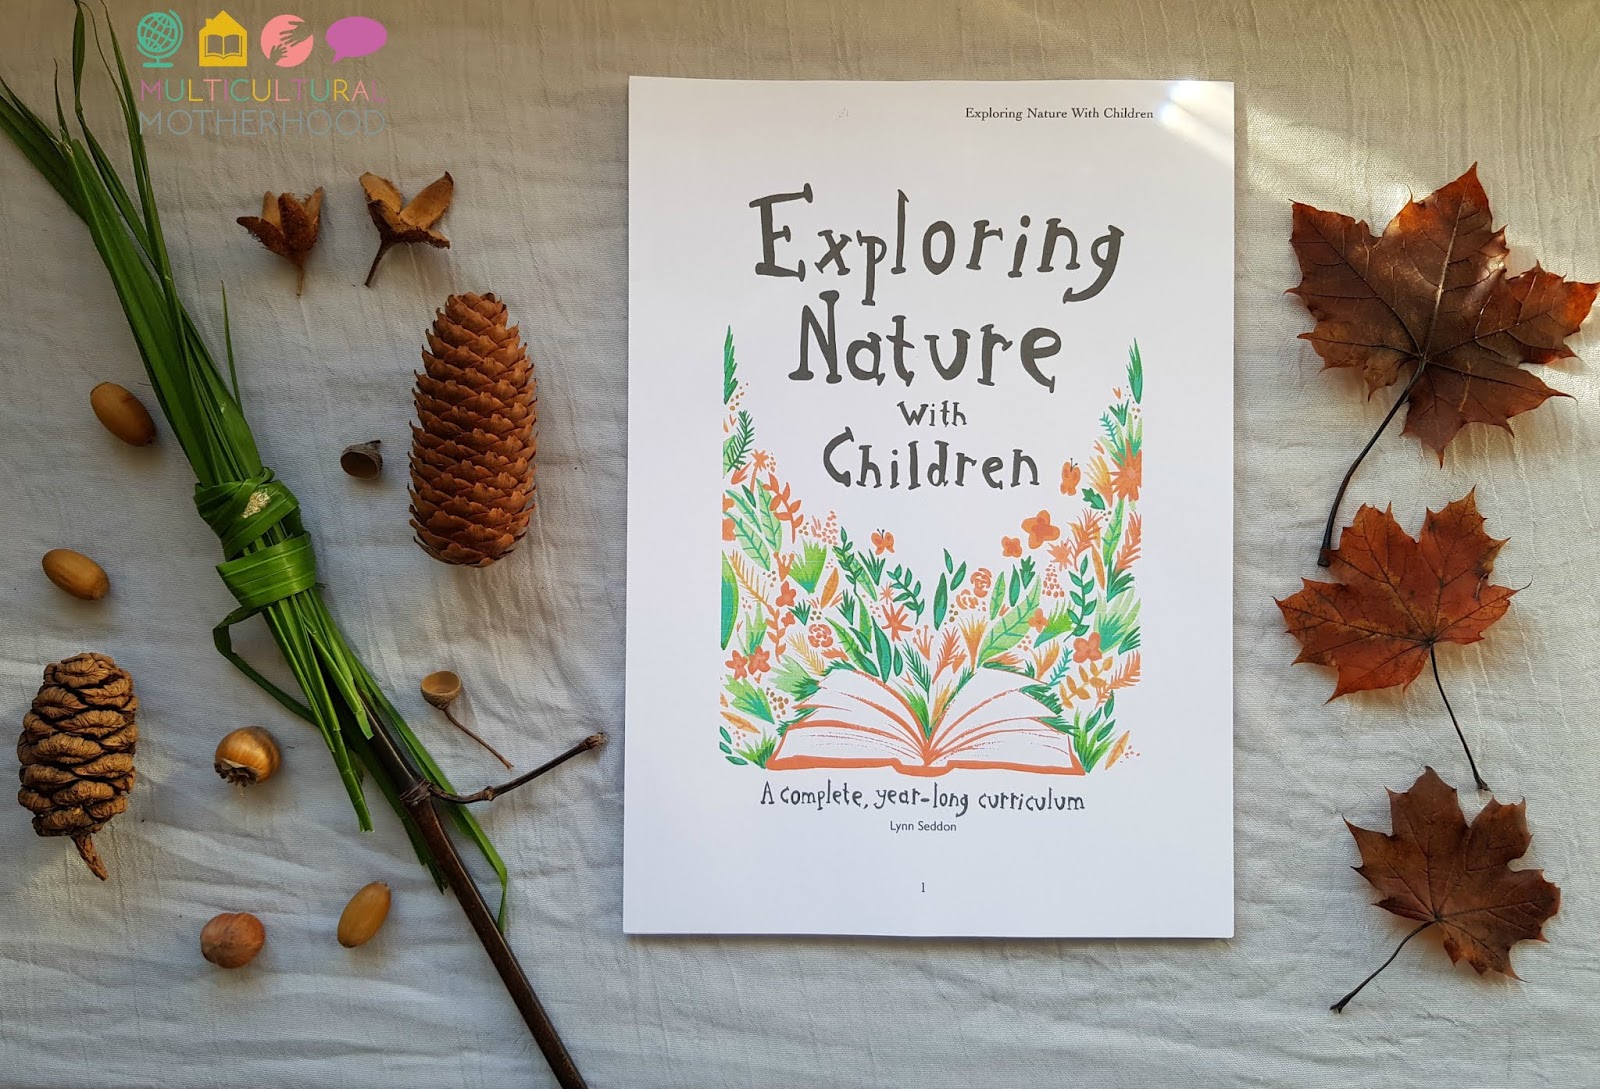 Slud Sæt tabellen op overfladisk 8 Reasons to Use Exploring Nature With Children In Your Homeschool |  Multicultural Motherhood